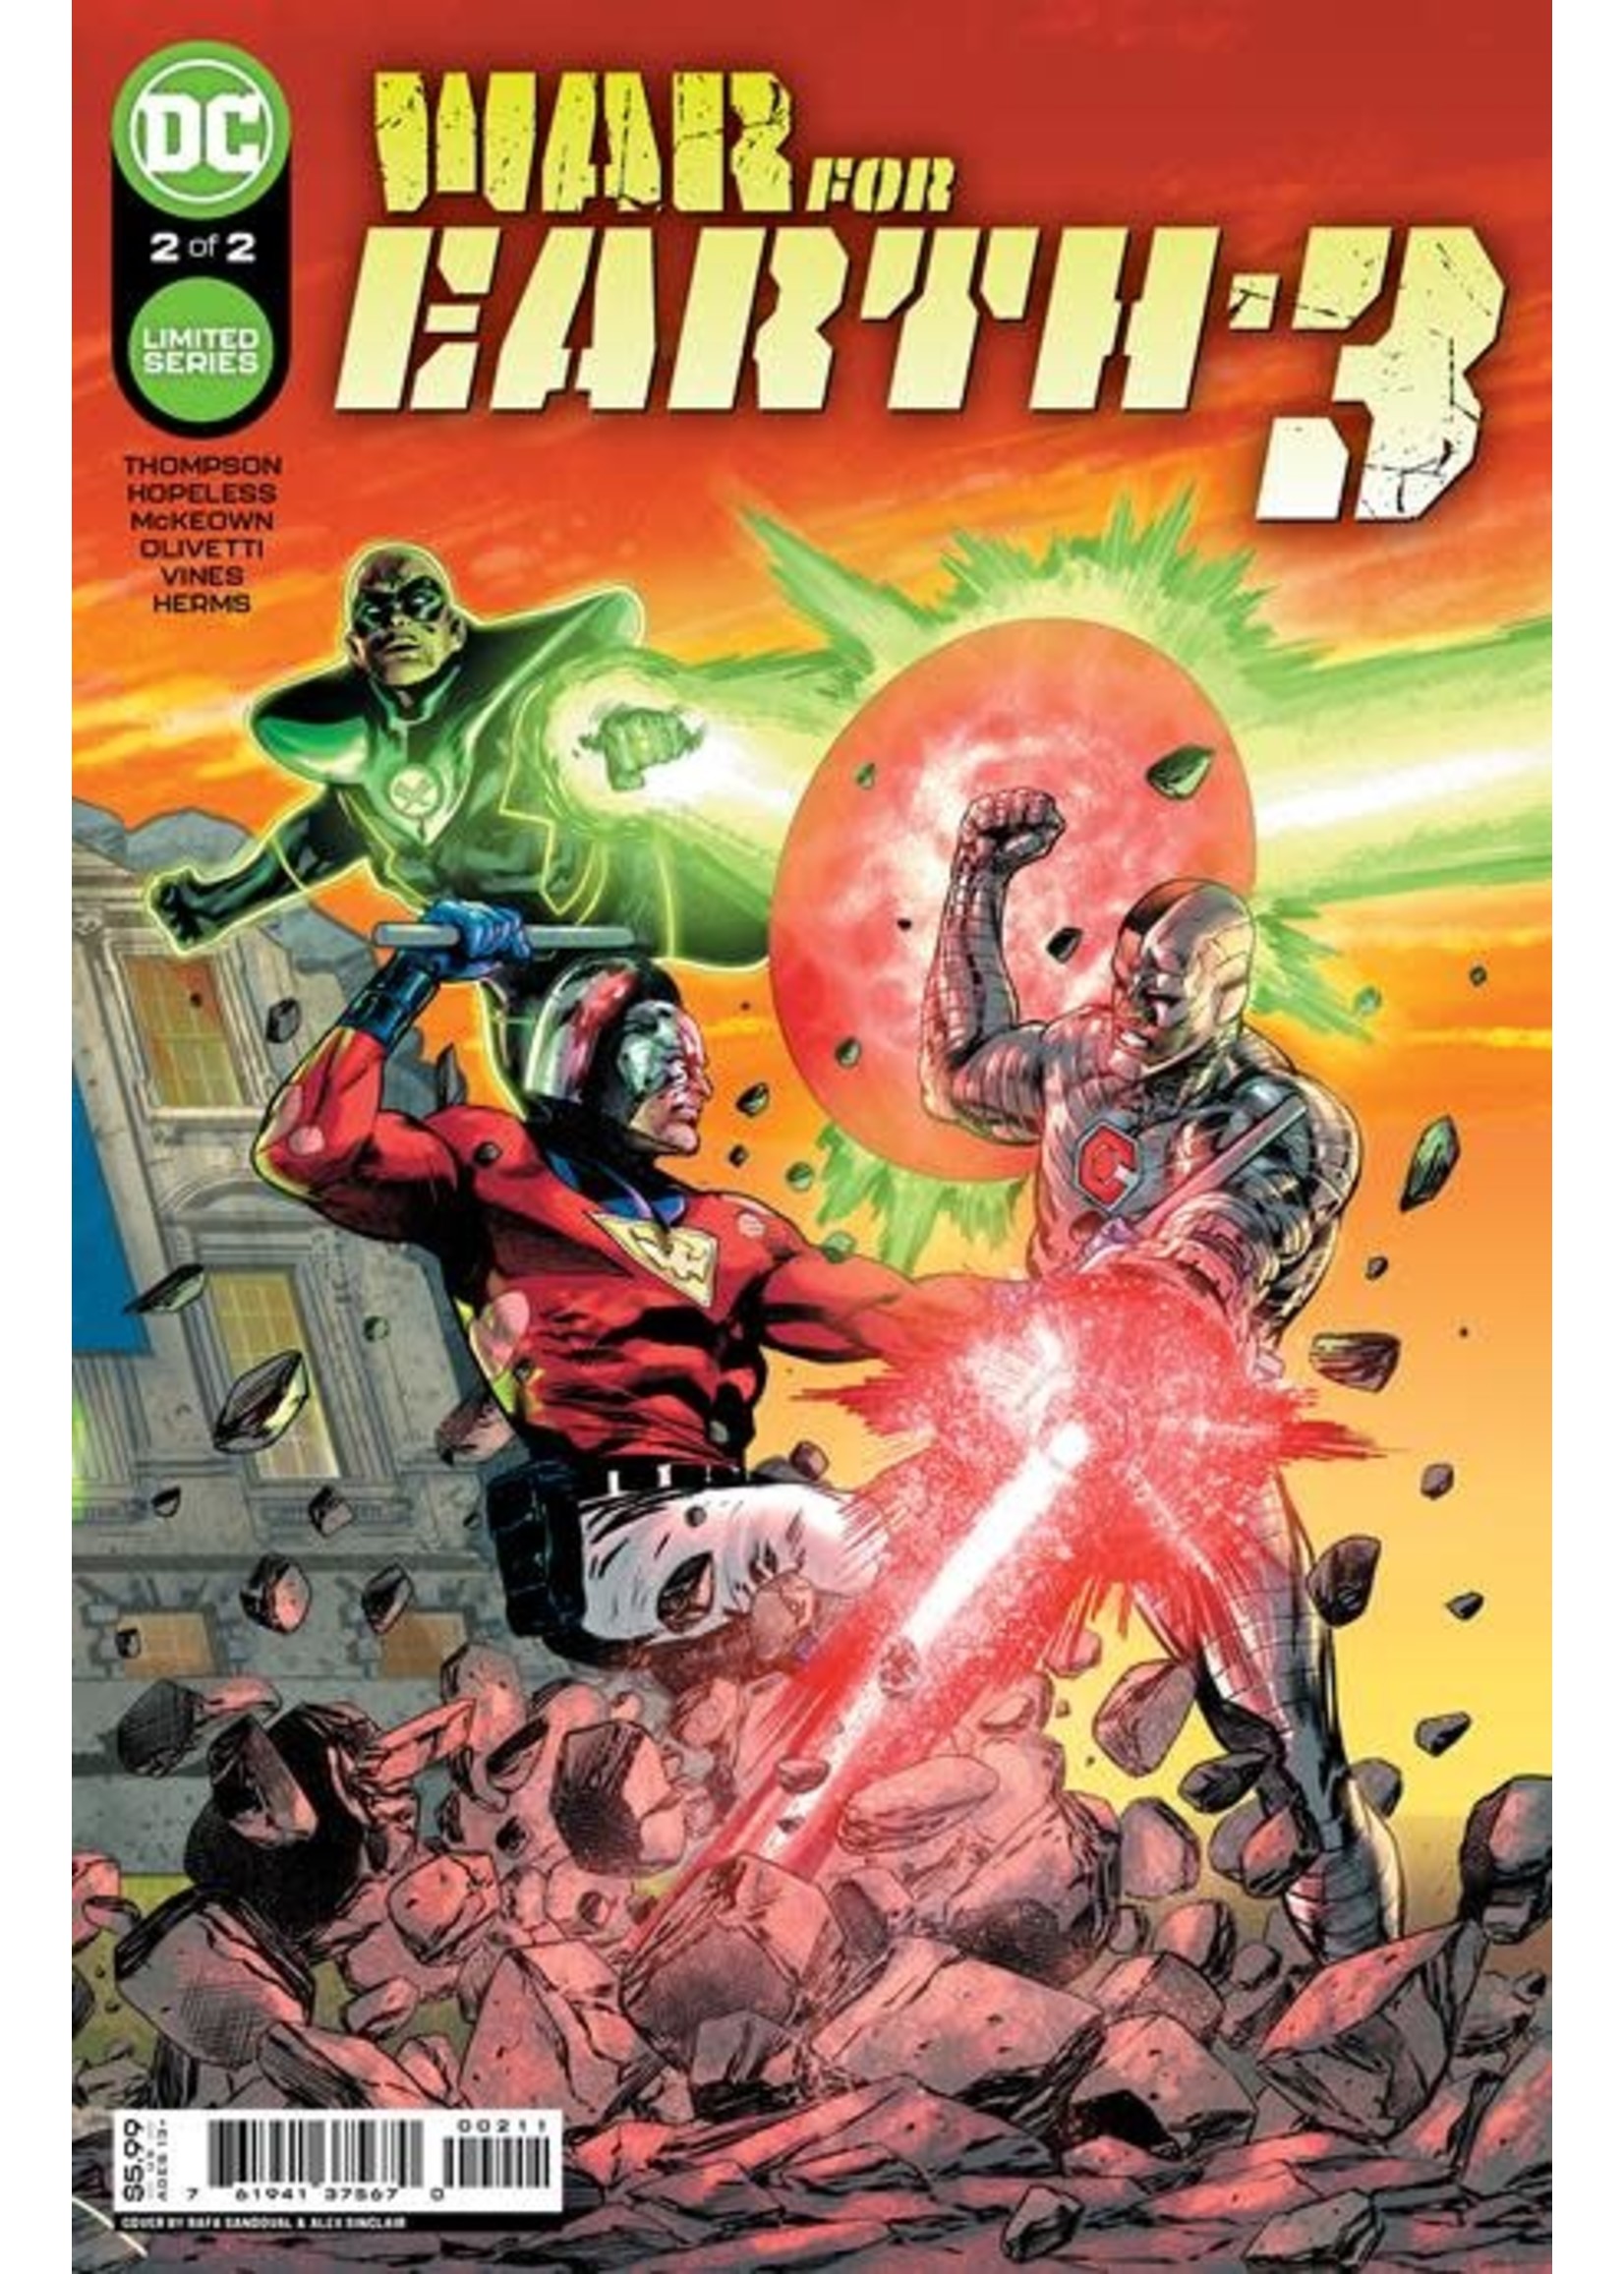 DC COMICS WAR FOR EARTH-3 #2 (OF 2) CVR A